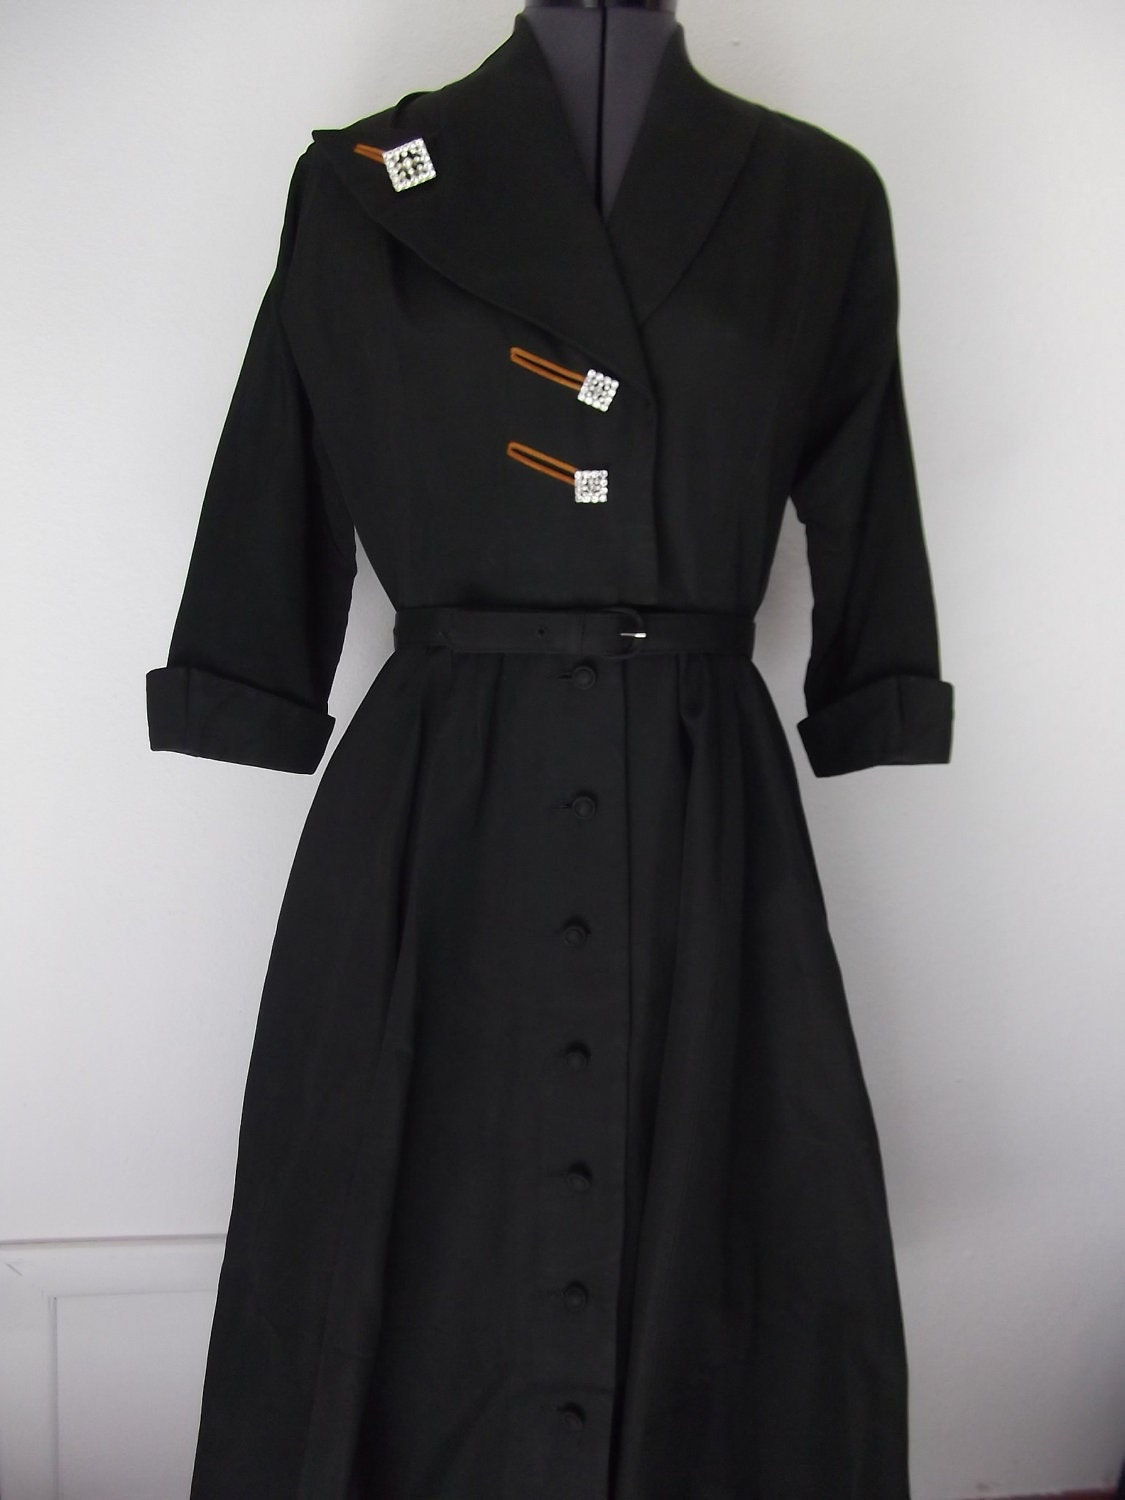 Vintage 1940s Nude Rayon World War II Era Swing Dress Size